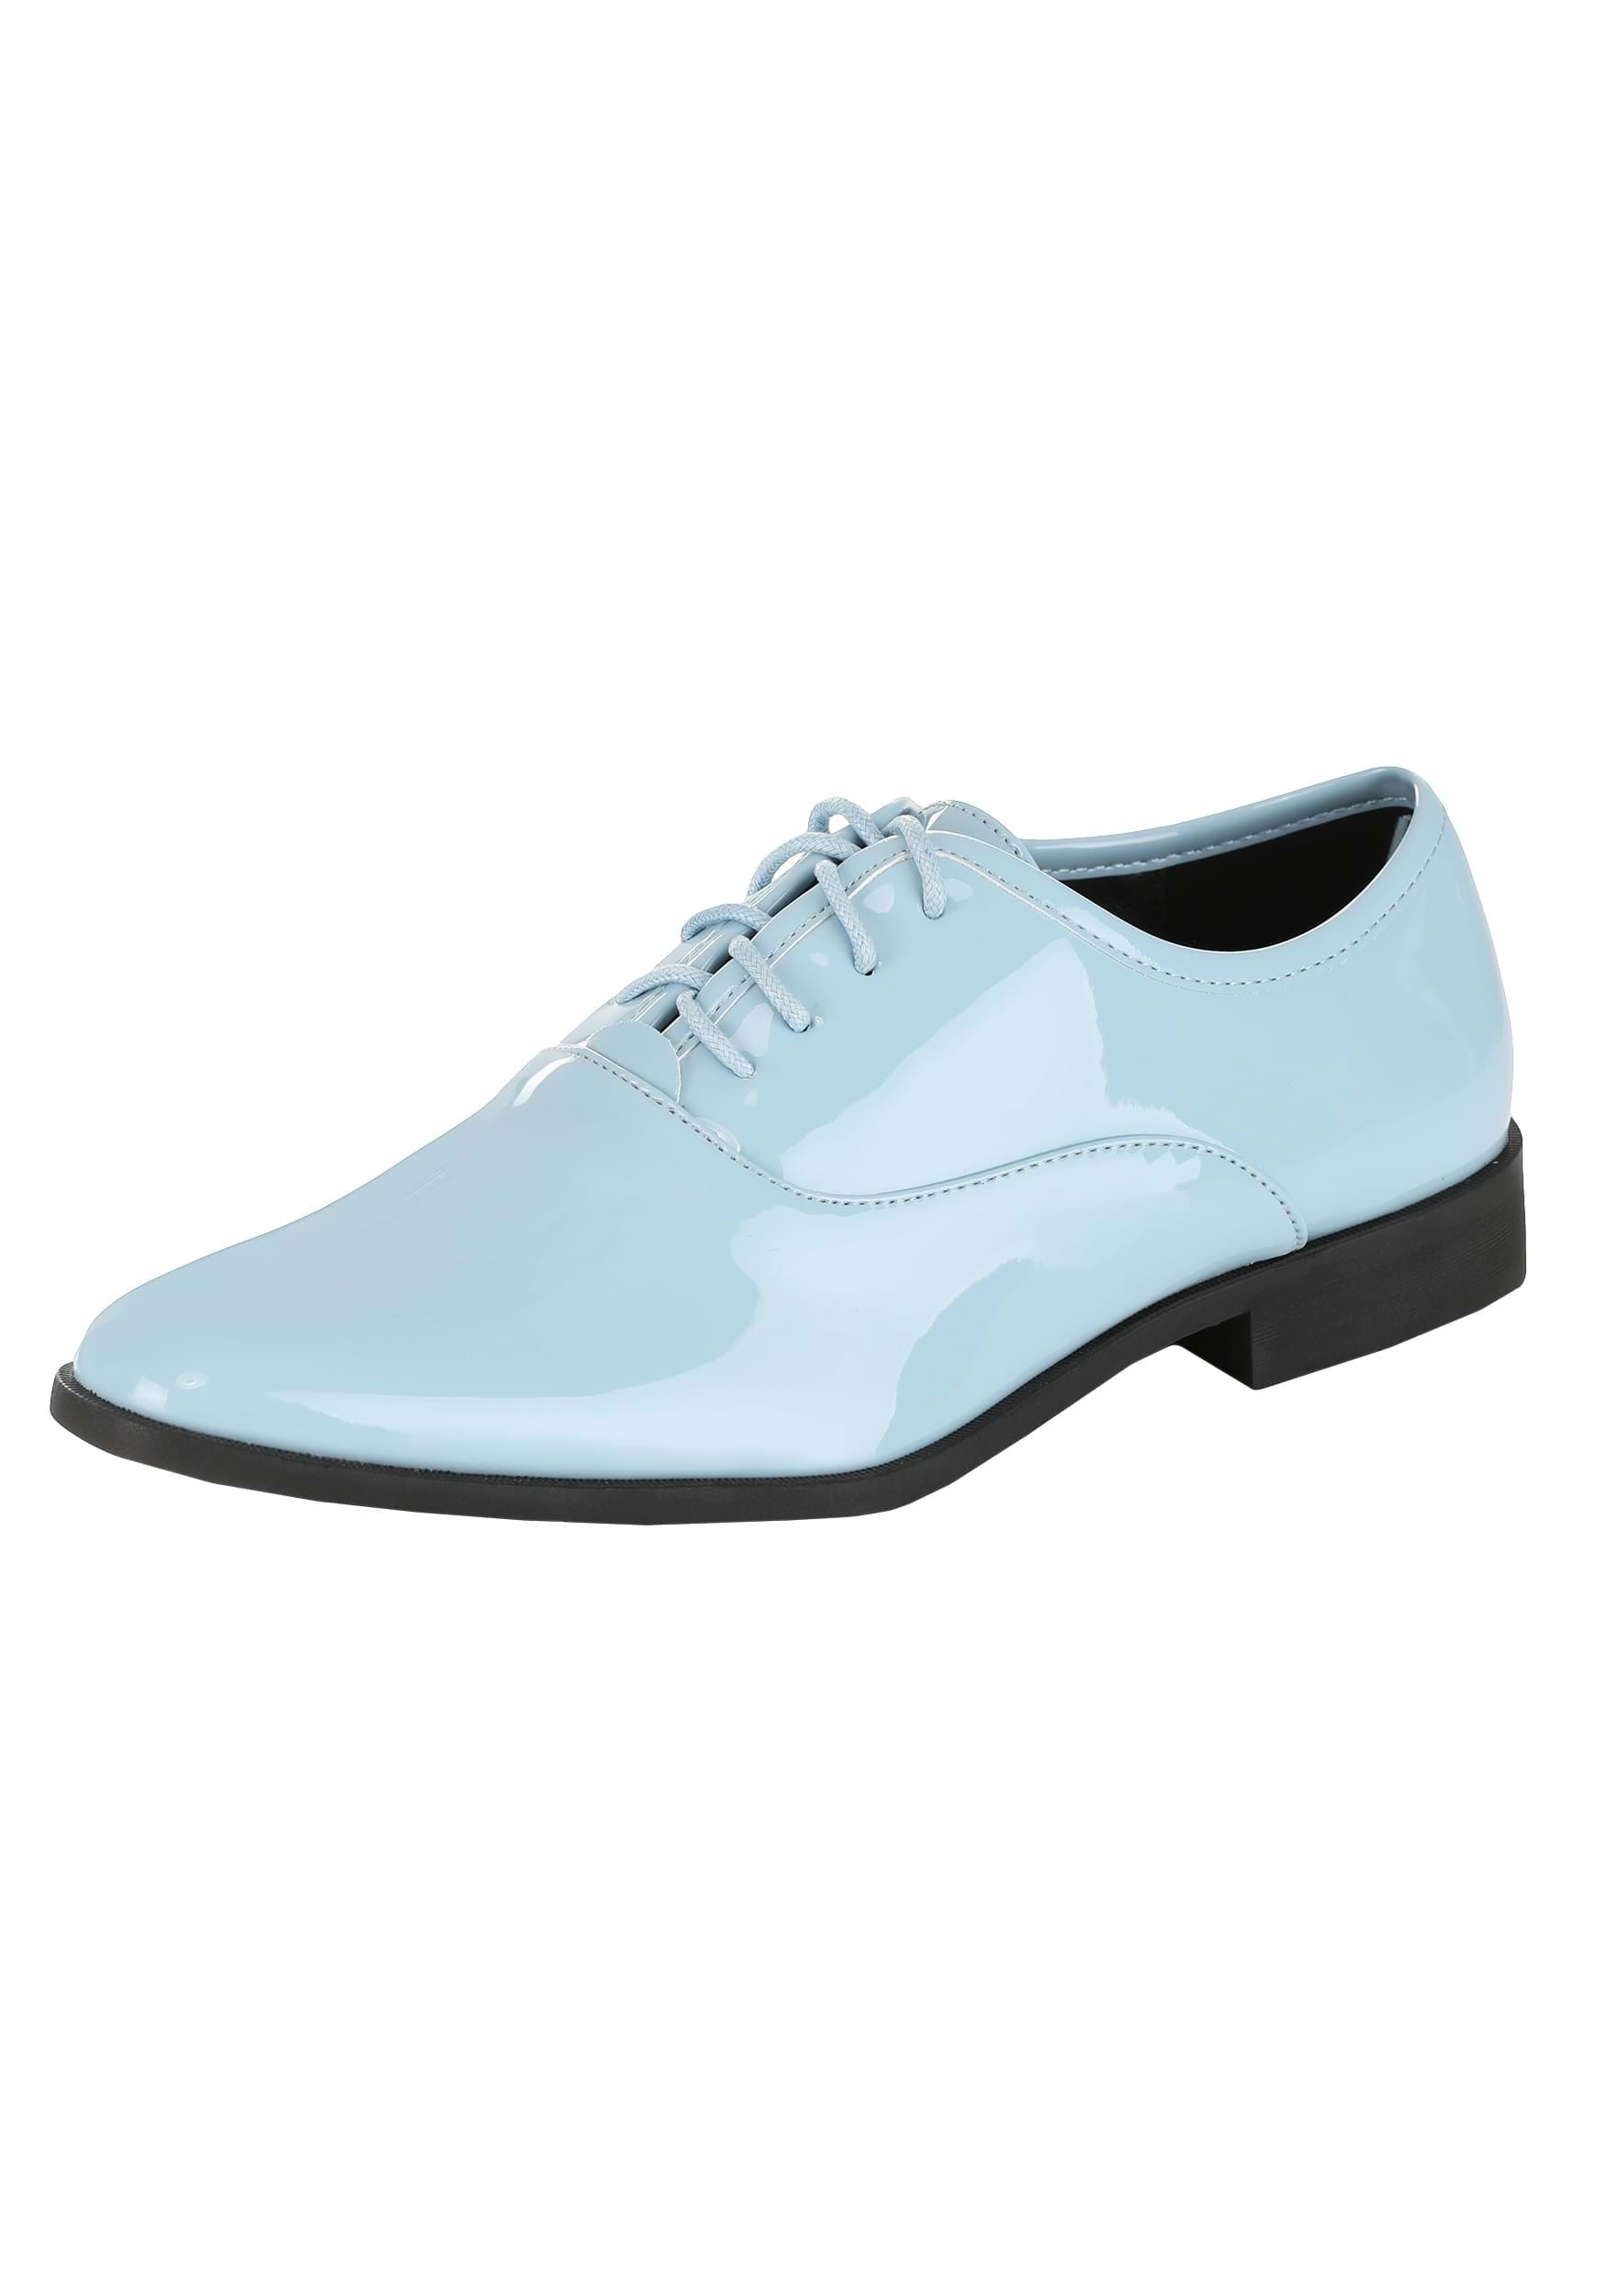 light blue dress shoes mens